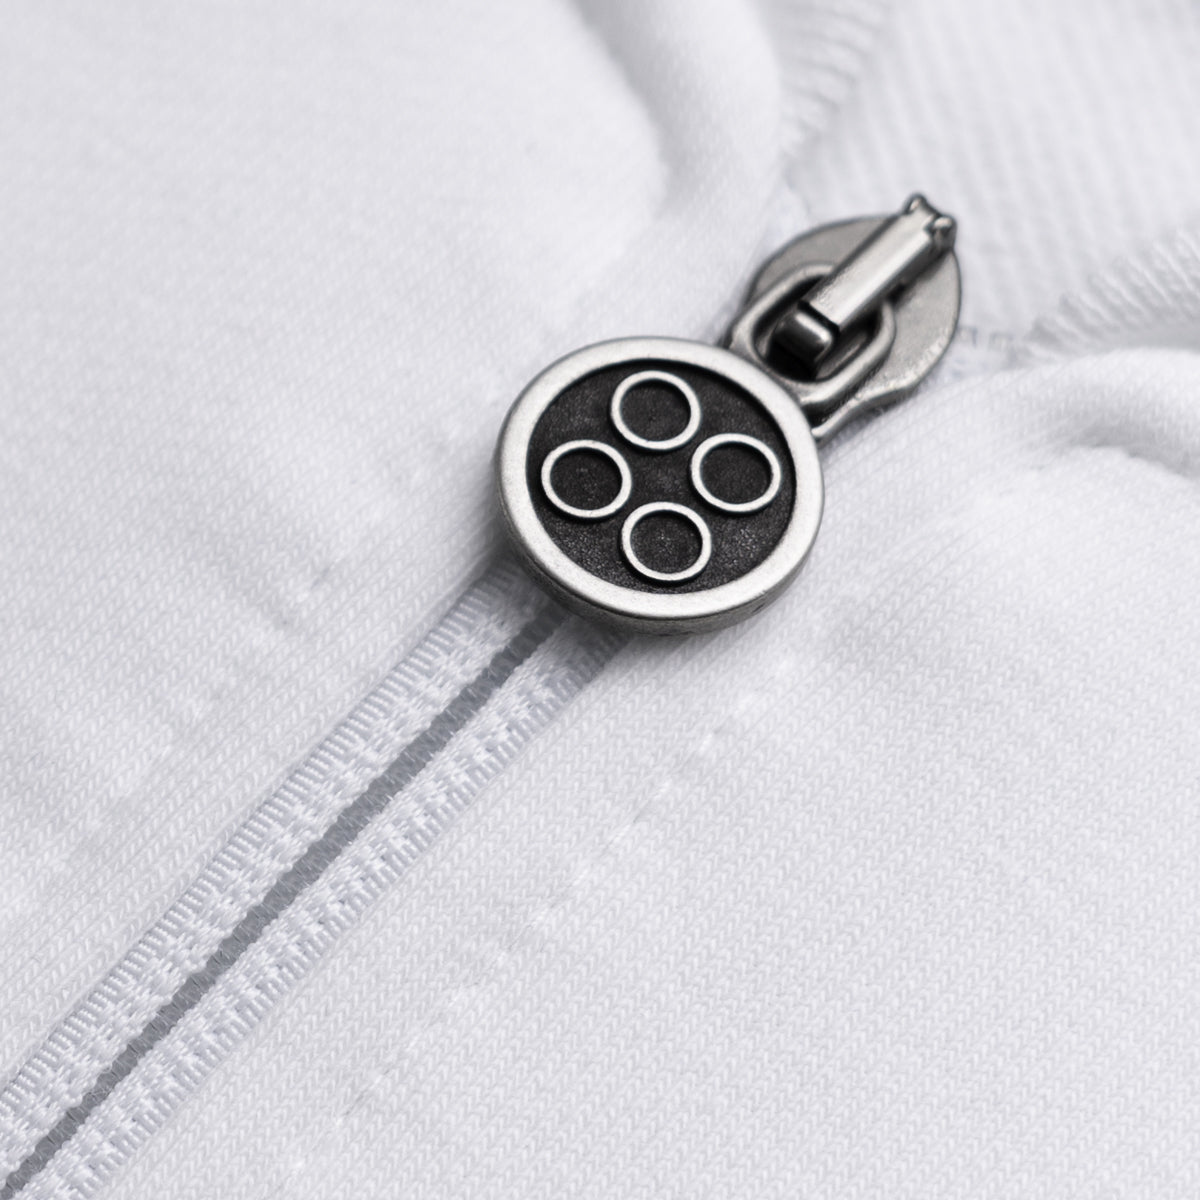 Men’s basic full-zip sweatshirt white | Team Collection